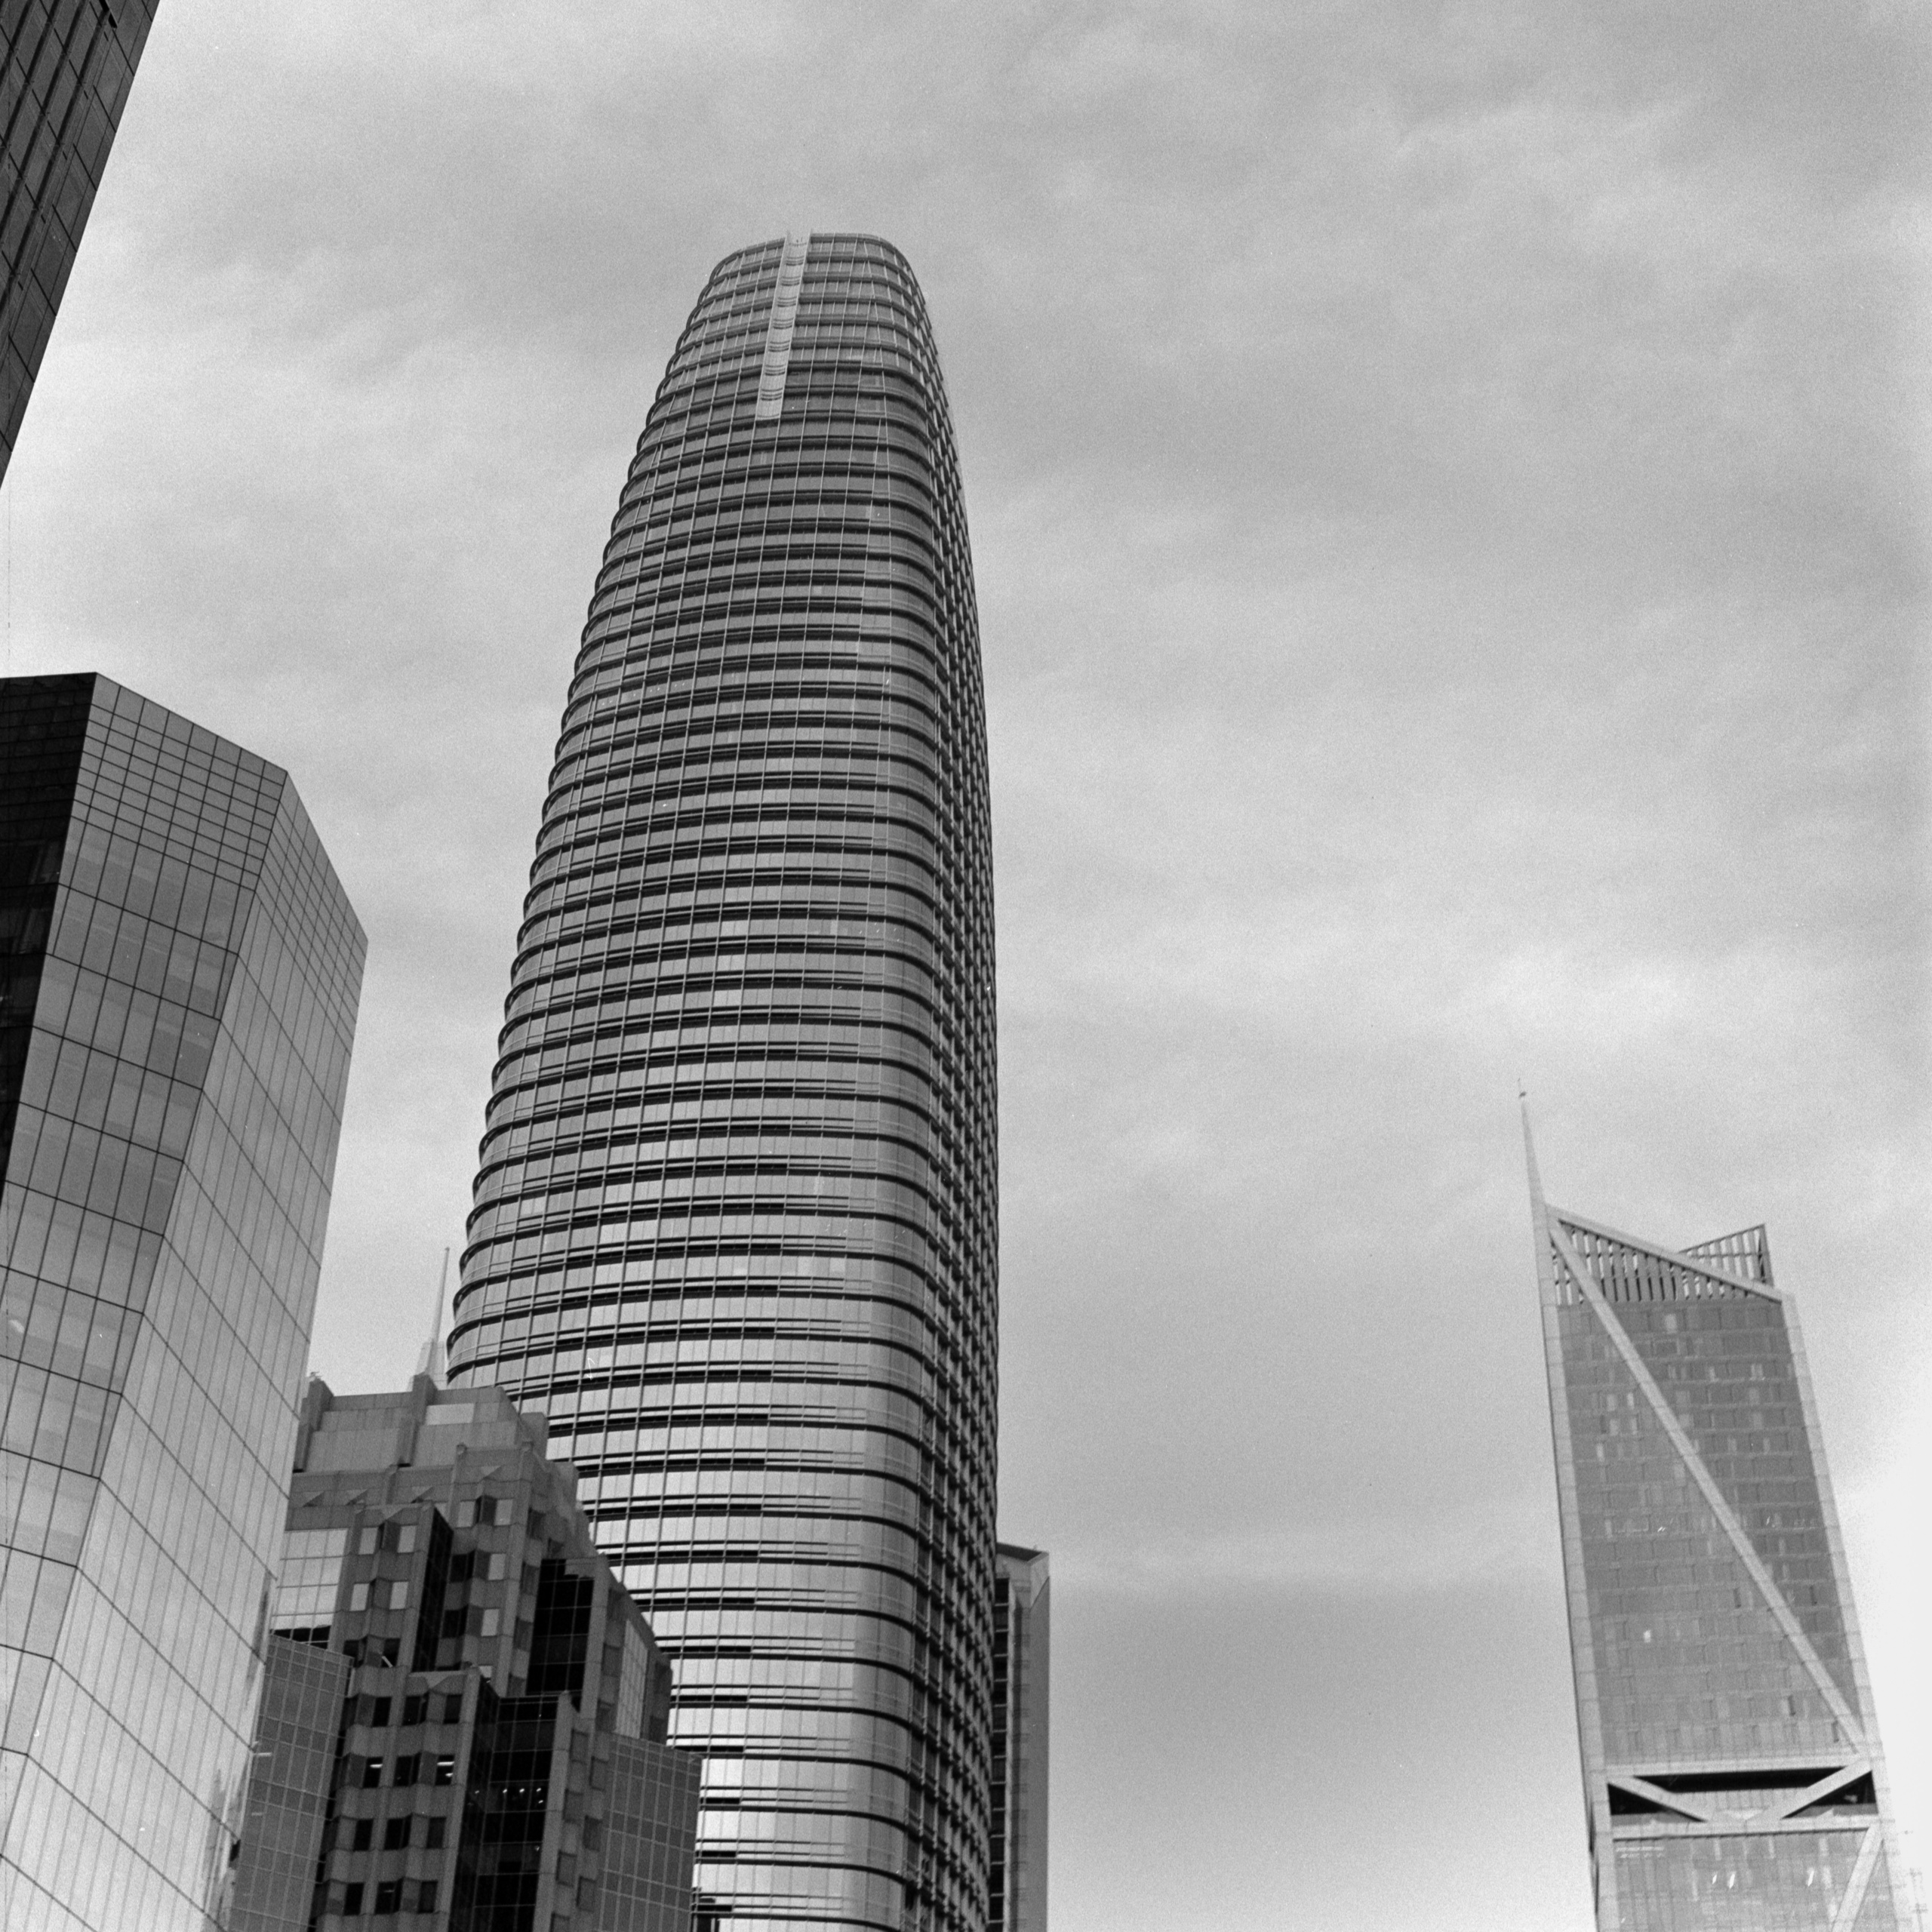 Salesforce Tower in San Francisco, CA